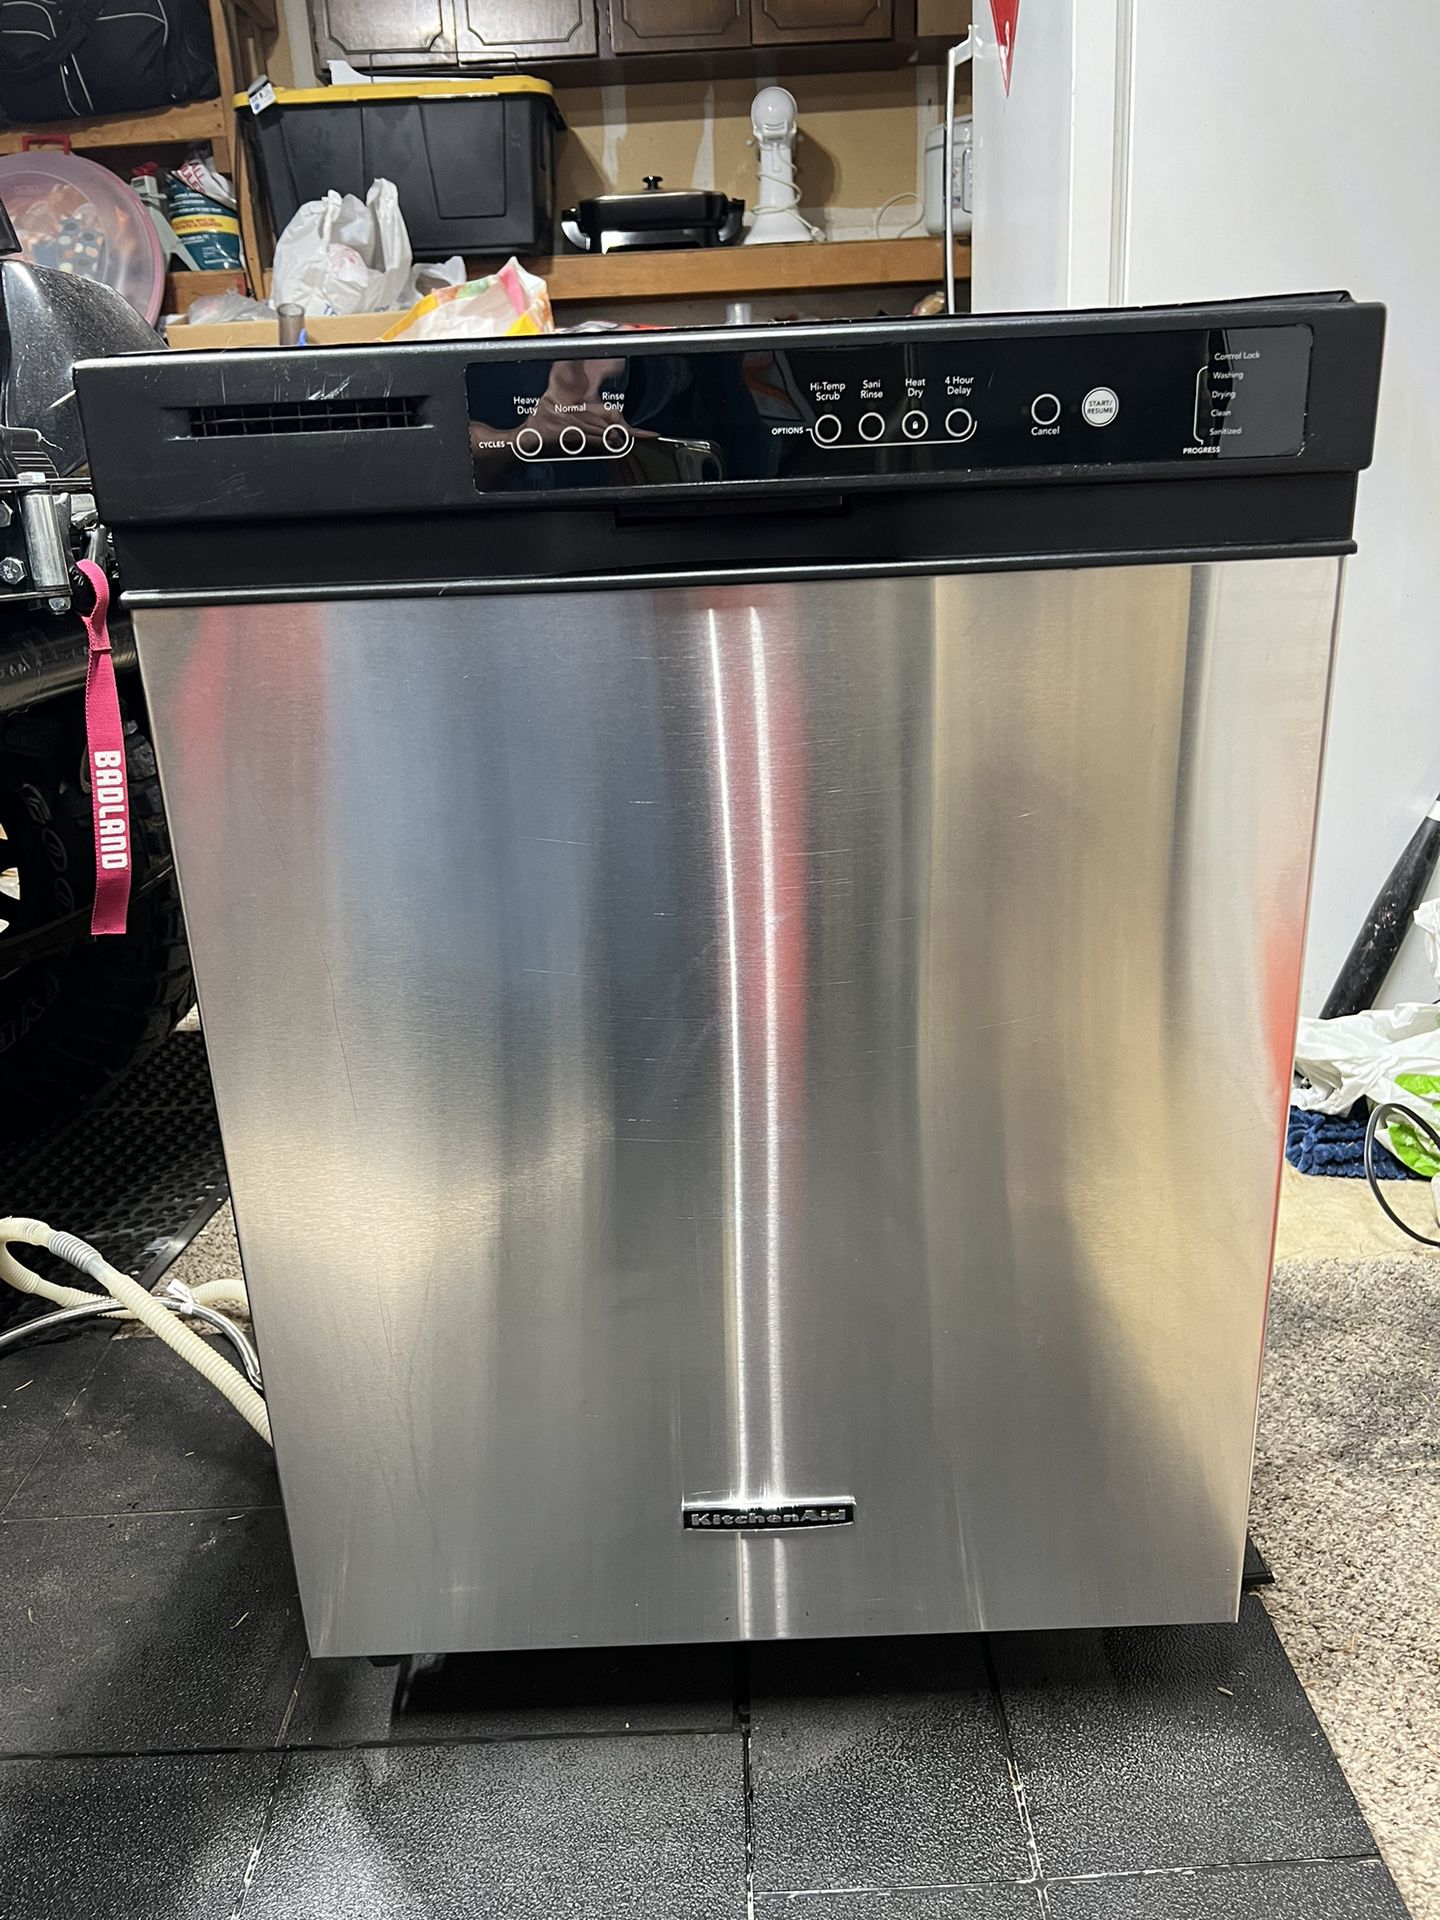 KitchenAid- Stainless Steel Dishwasher! 